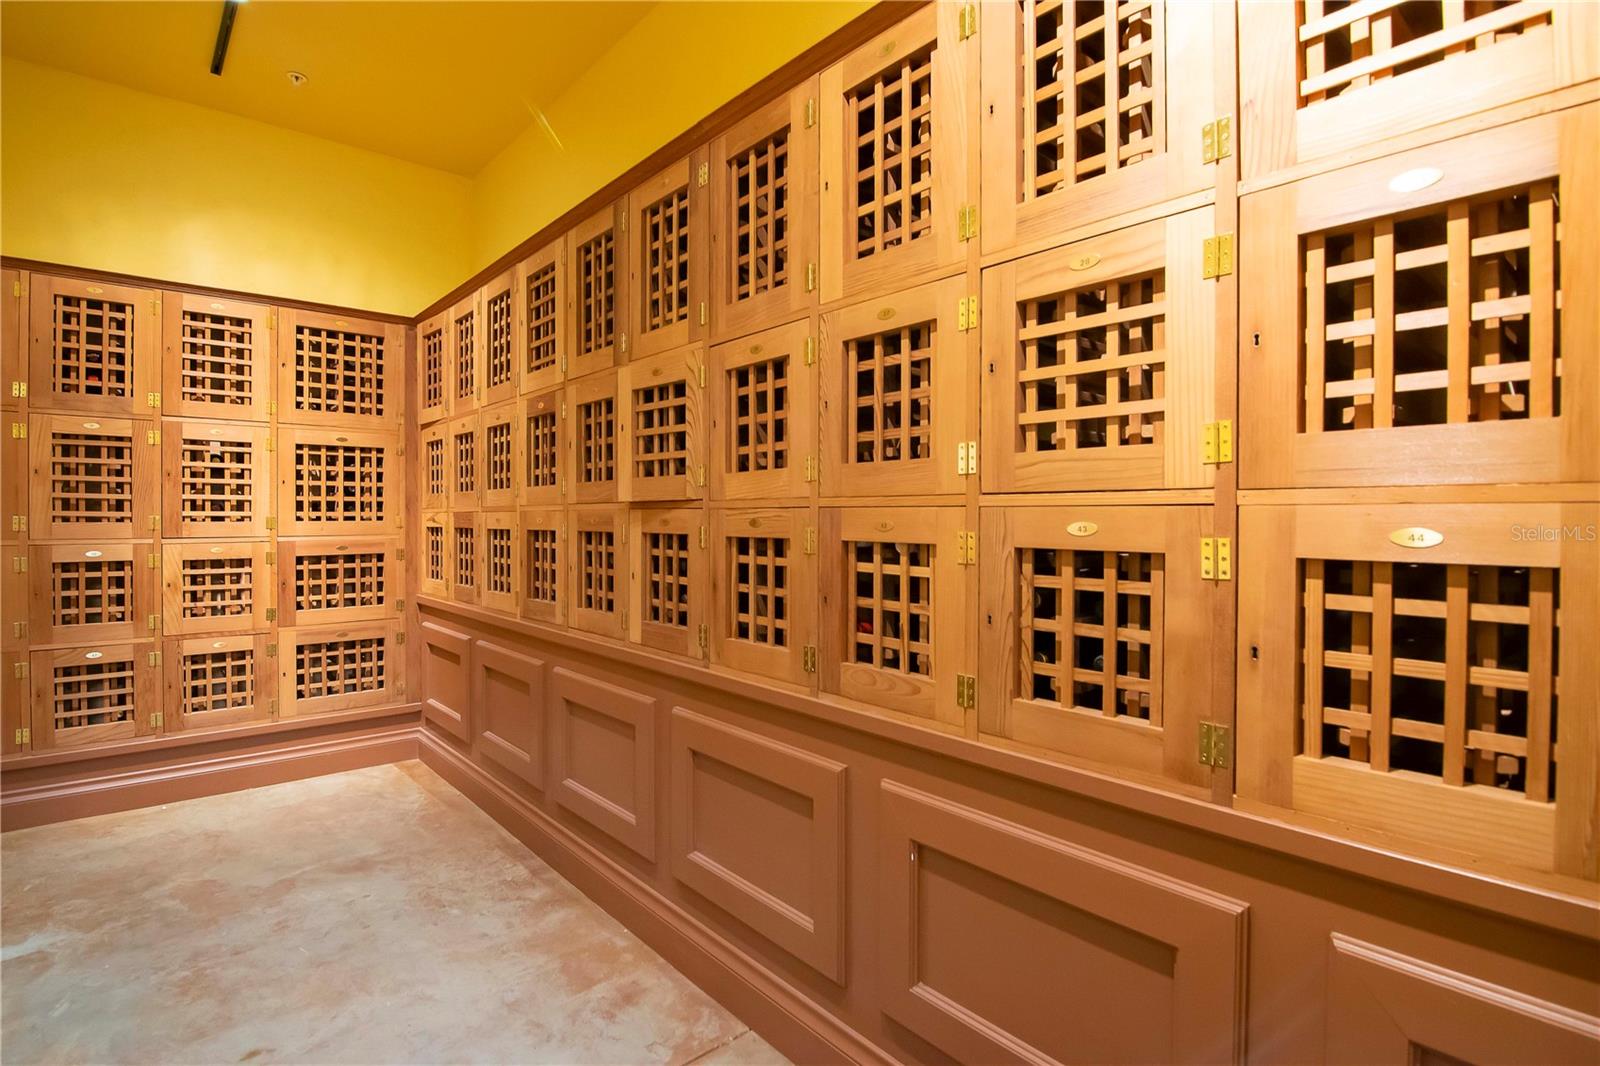 Wine lockers